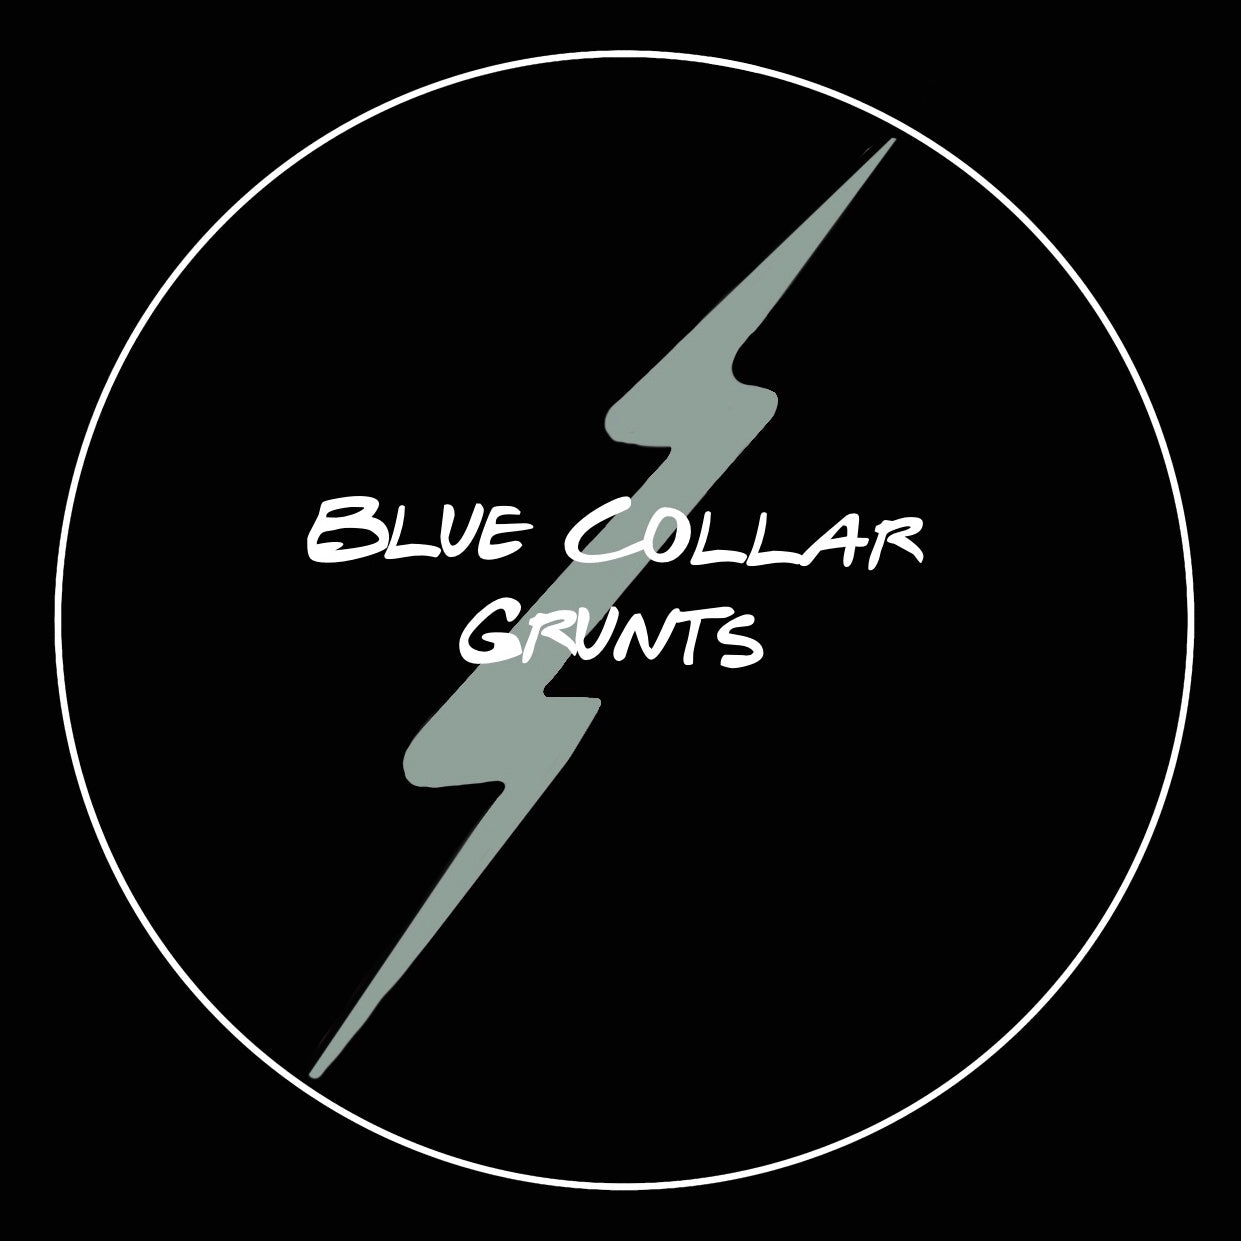 Blue Collar Grunts